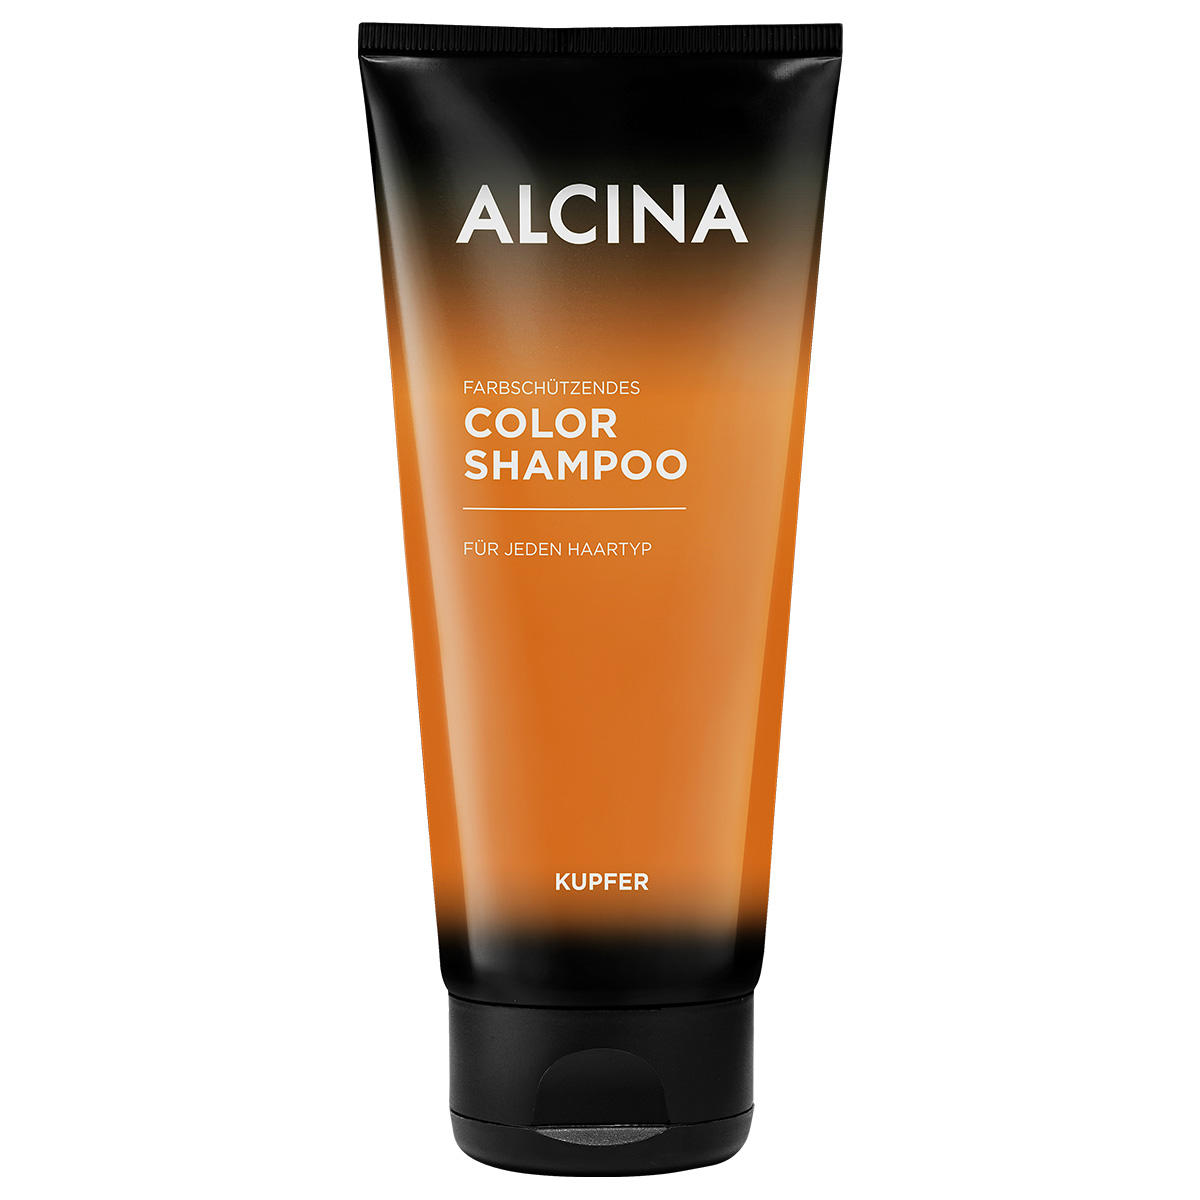 Alcina Color Shampoo Kupfer, 200 ml - 1